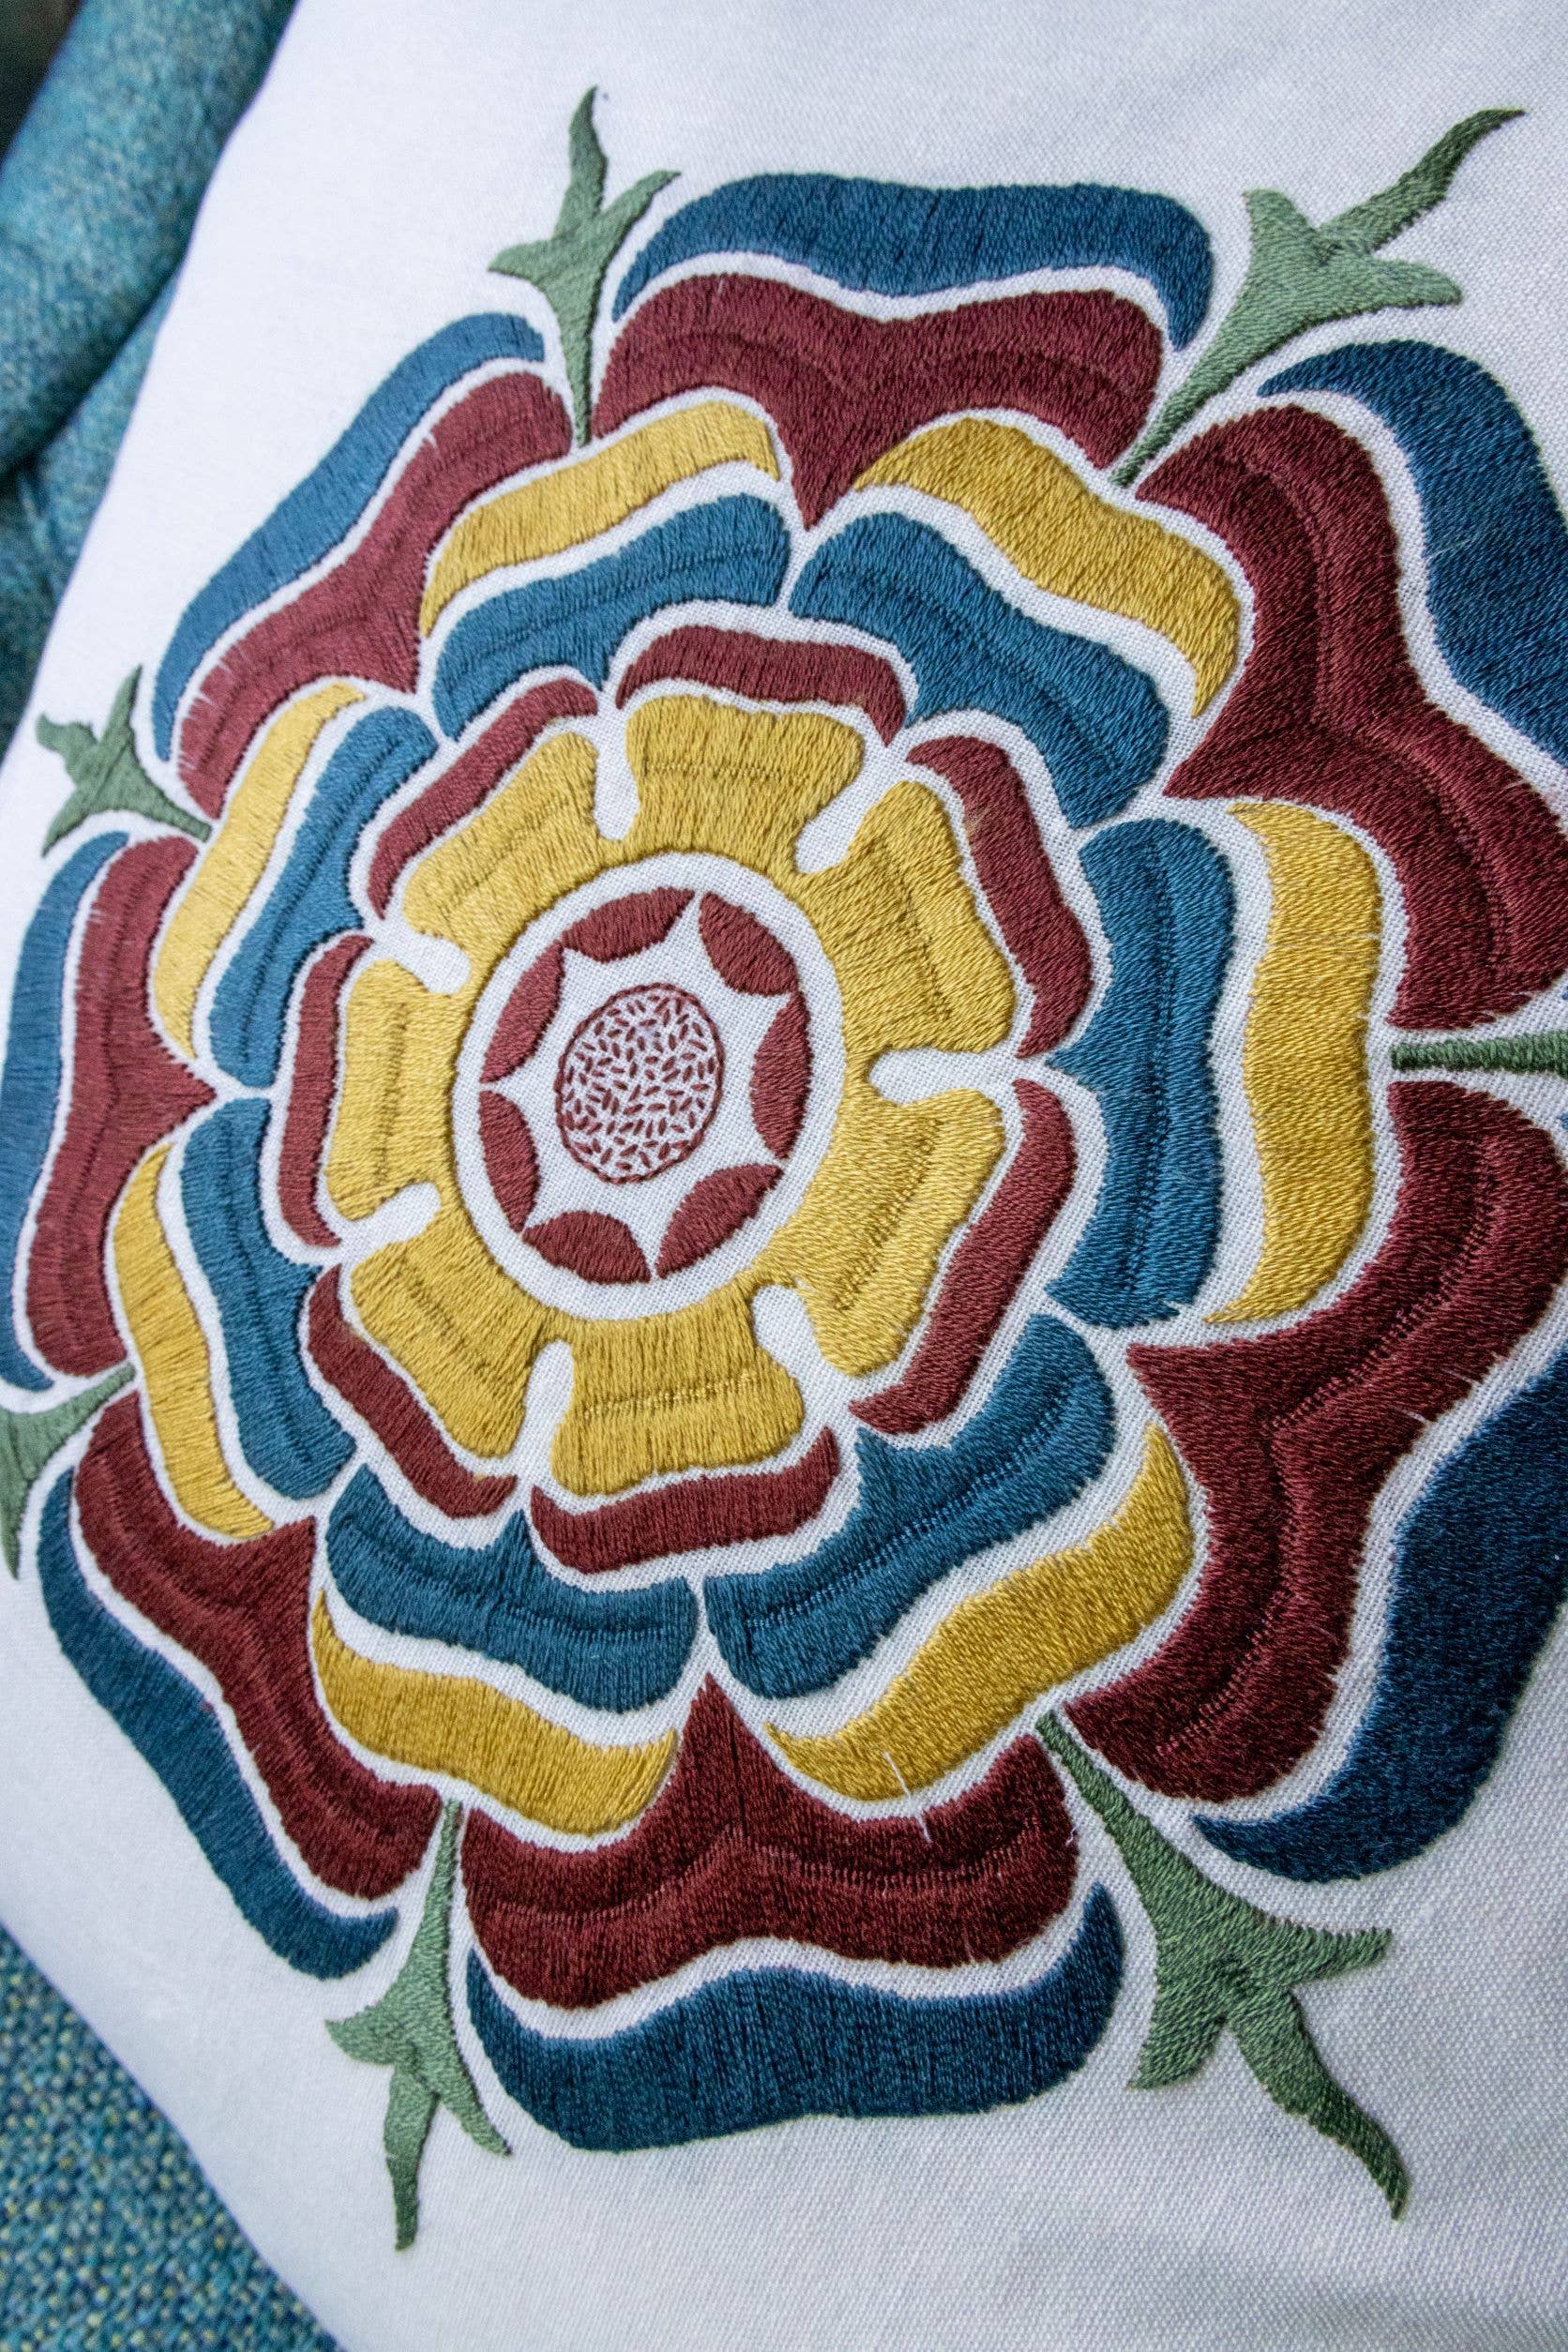 Avlea Folk Embroidery - Avlea Embroidery cushion kit Scottish Rose